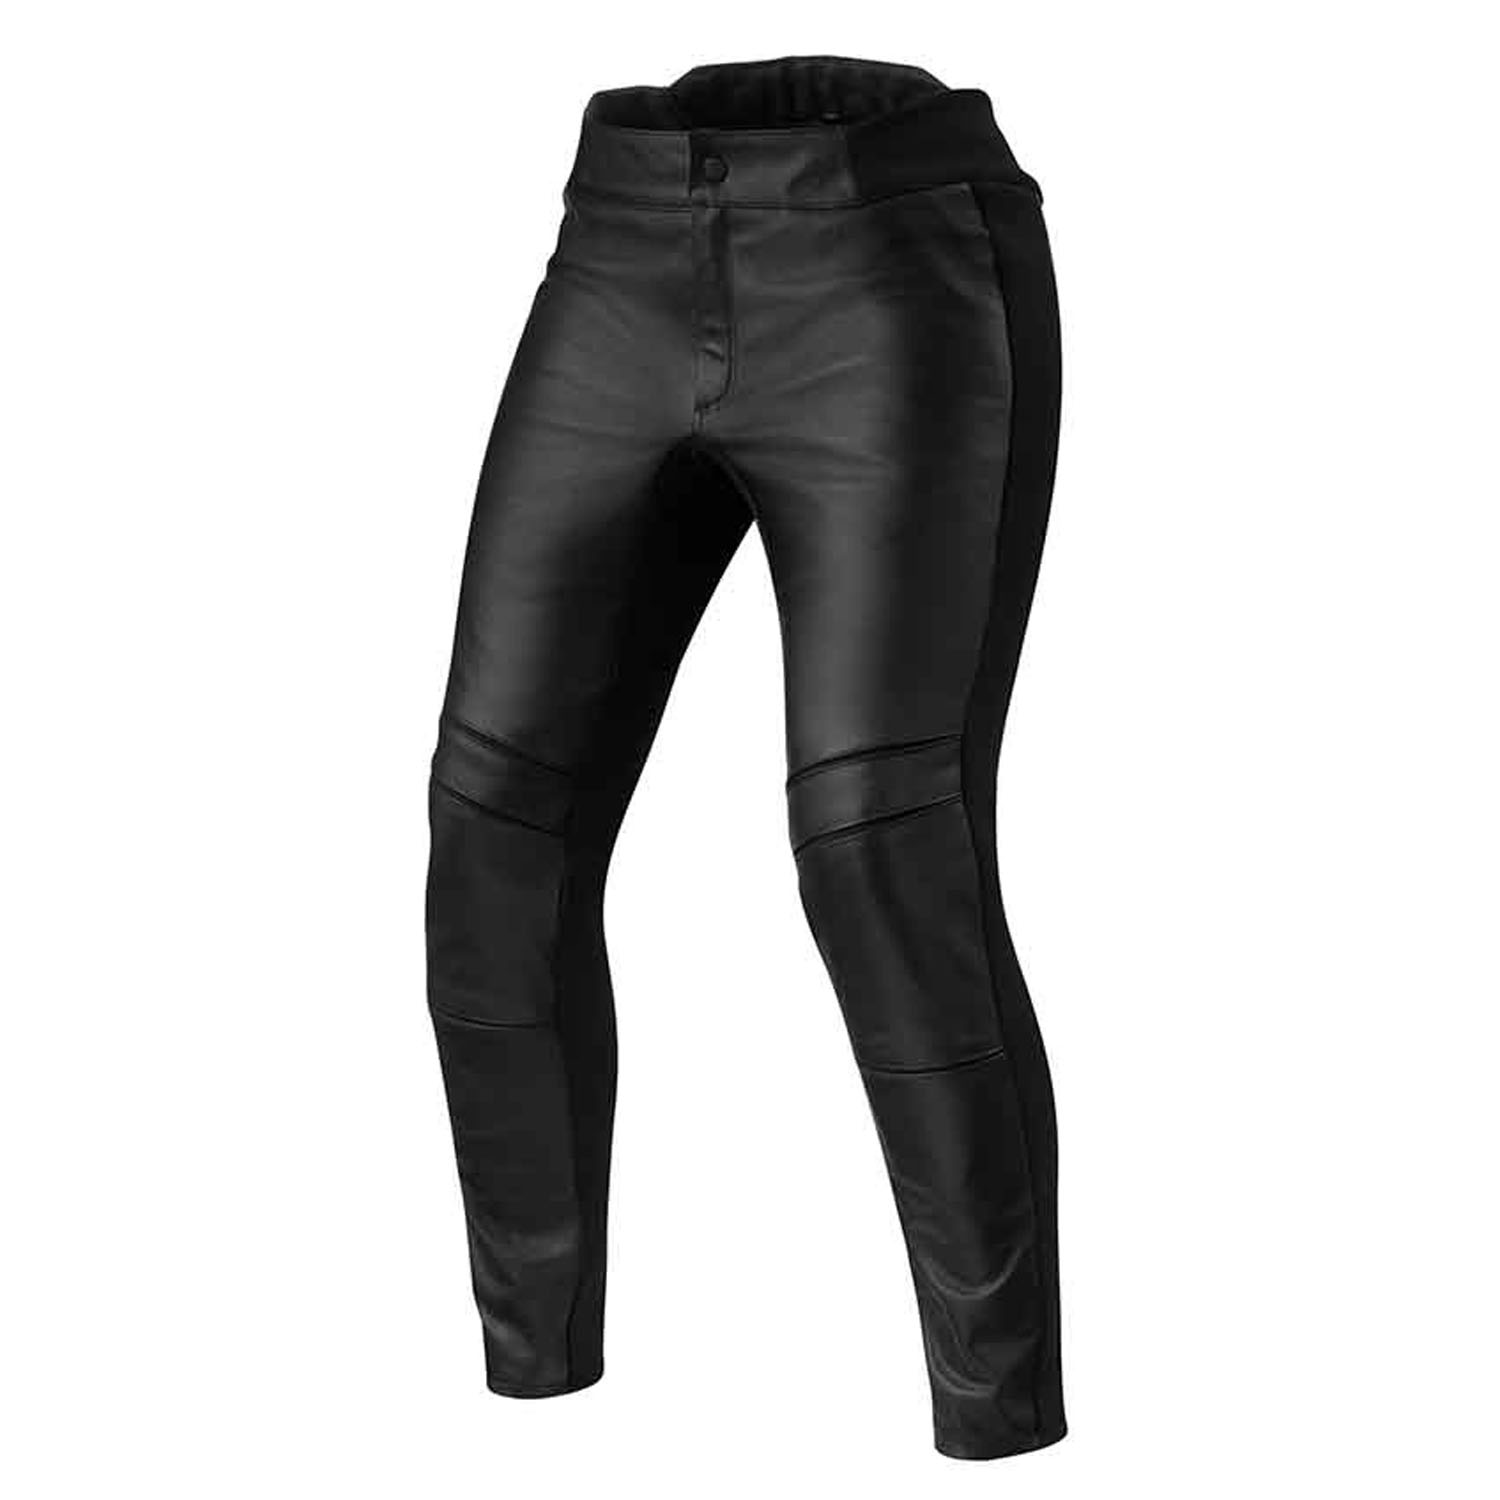 Image of EU REV'IT! Maci Ladies Black Standard Motorcycle Pants Taille 38